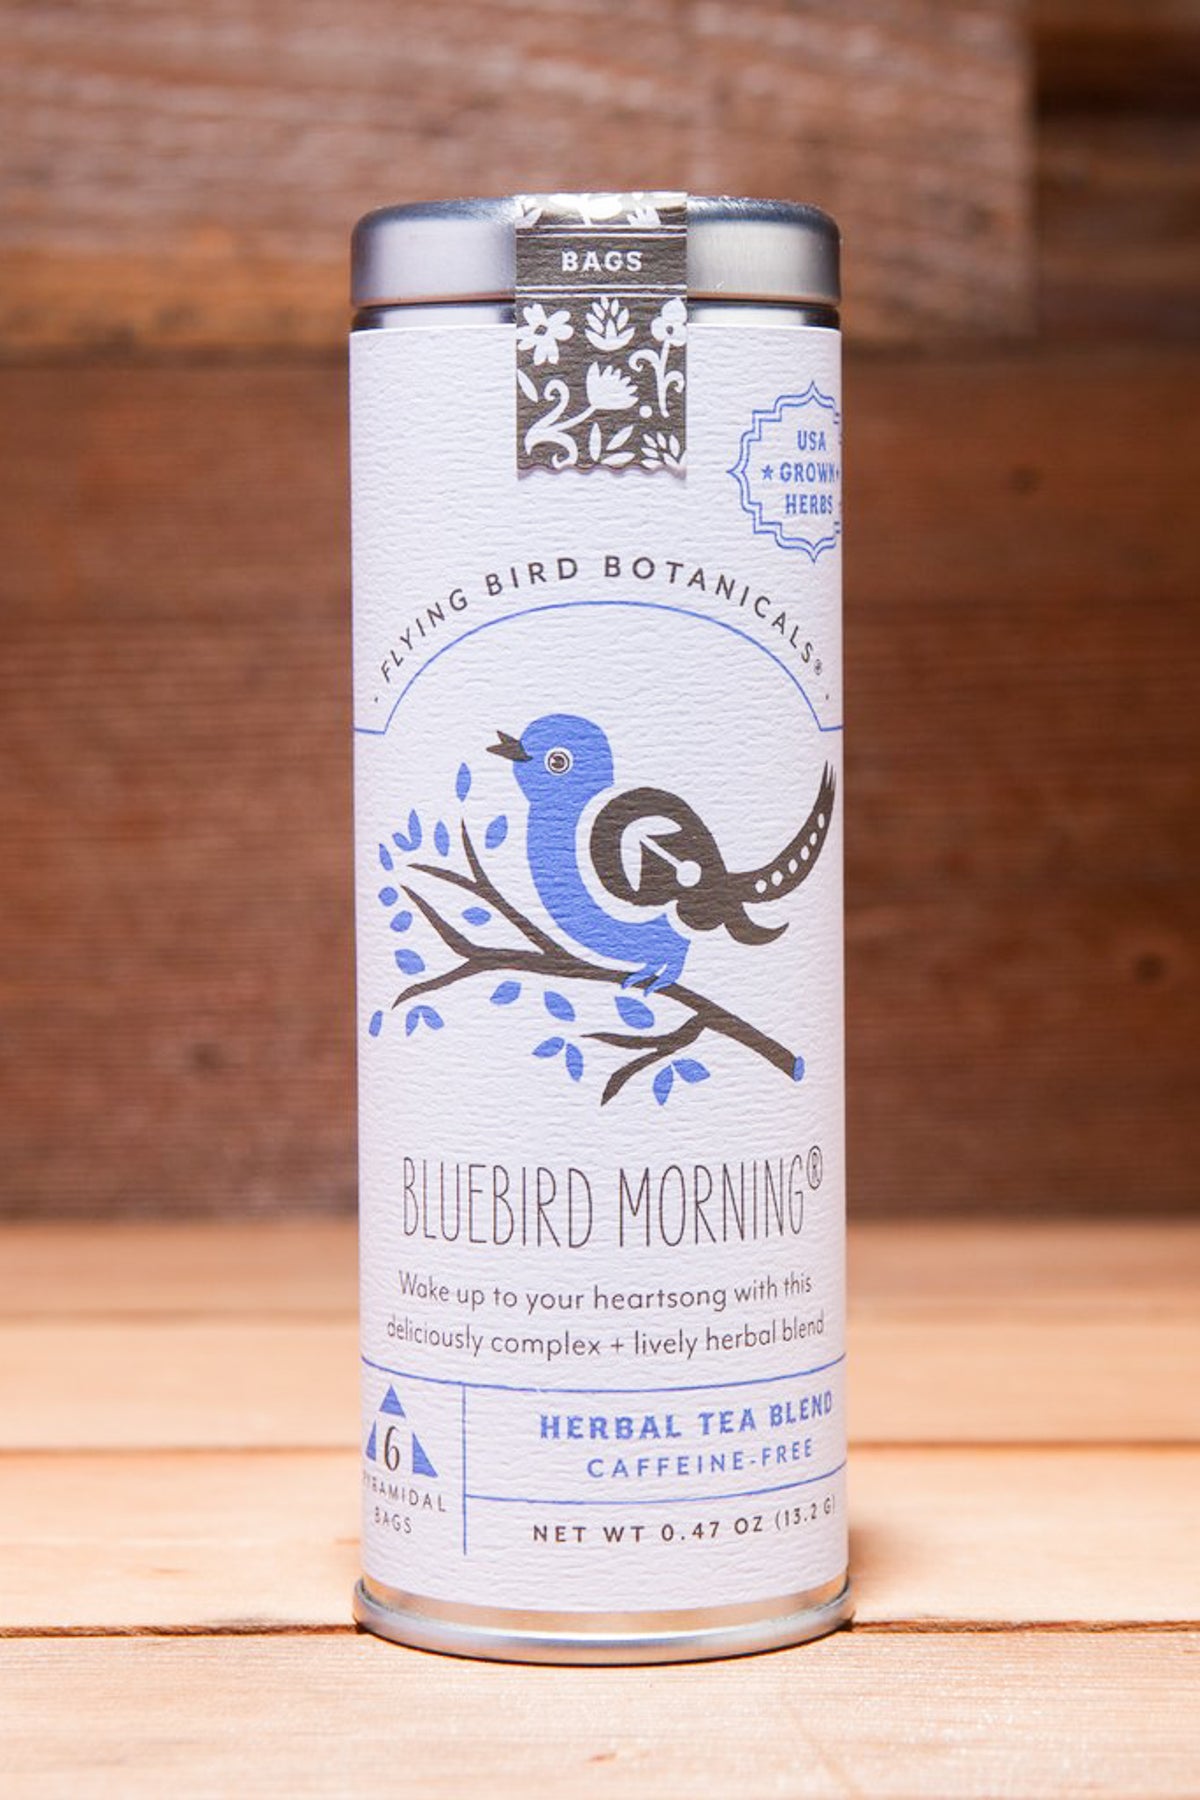 Flying Bird Botanicals Bluebird Morning Tea